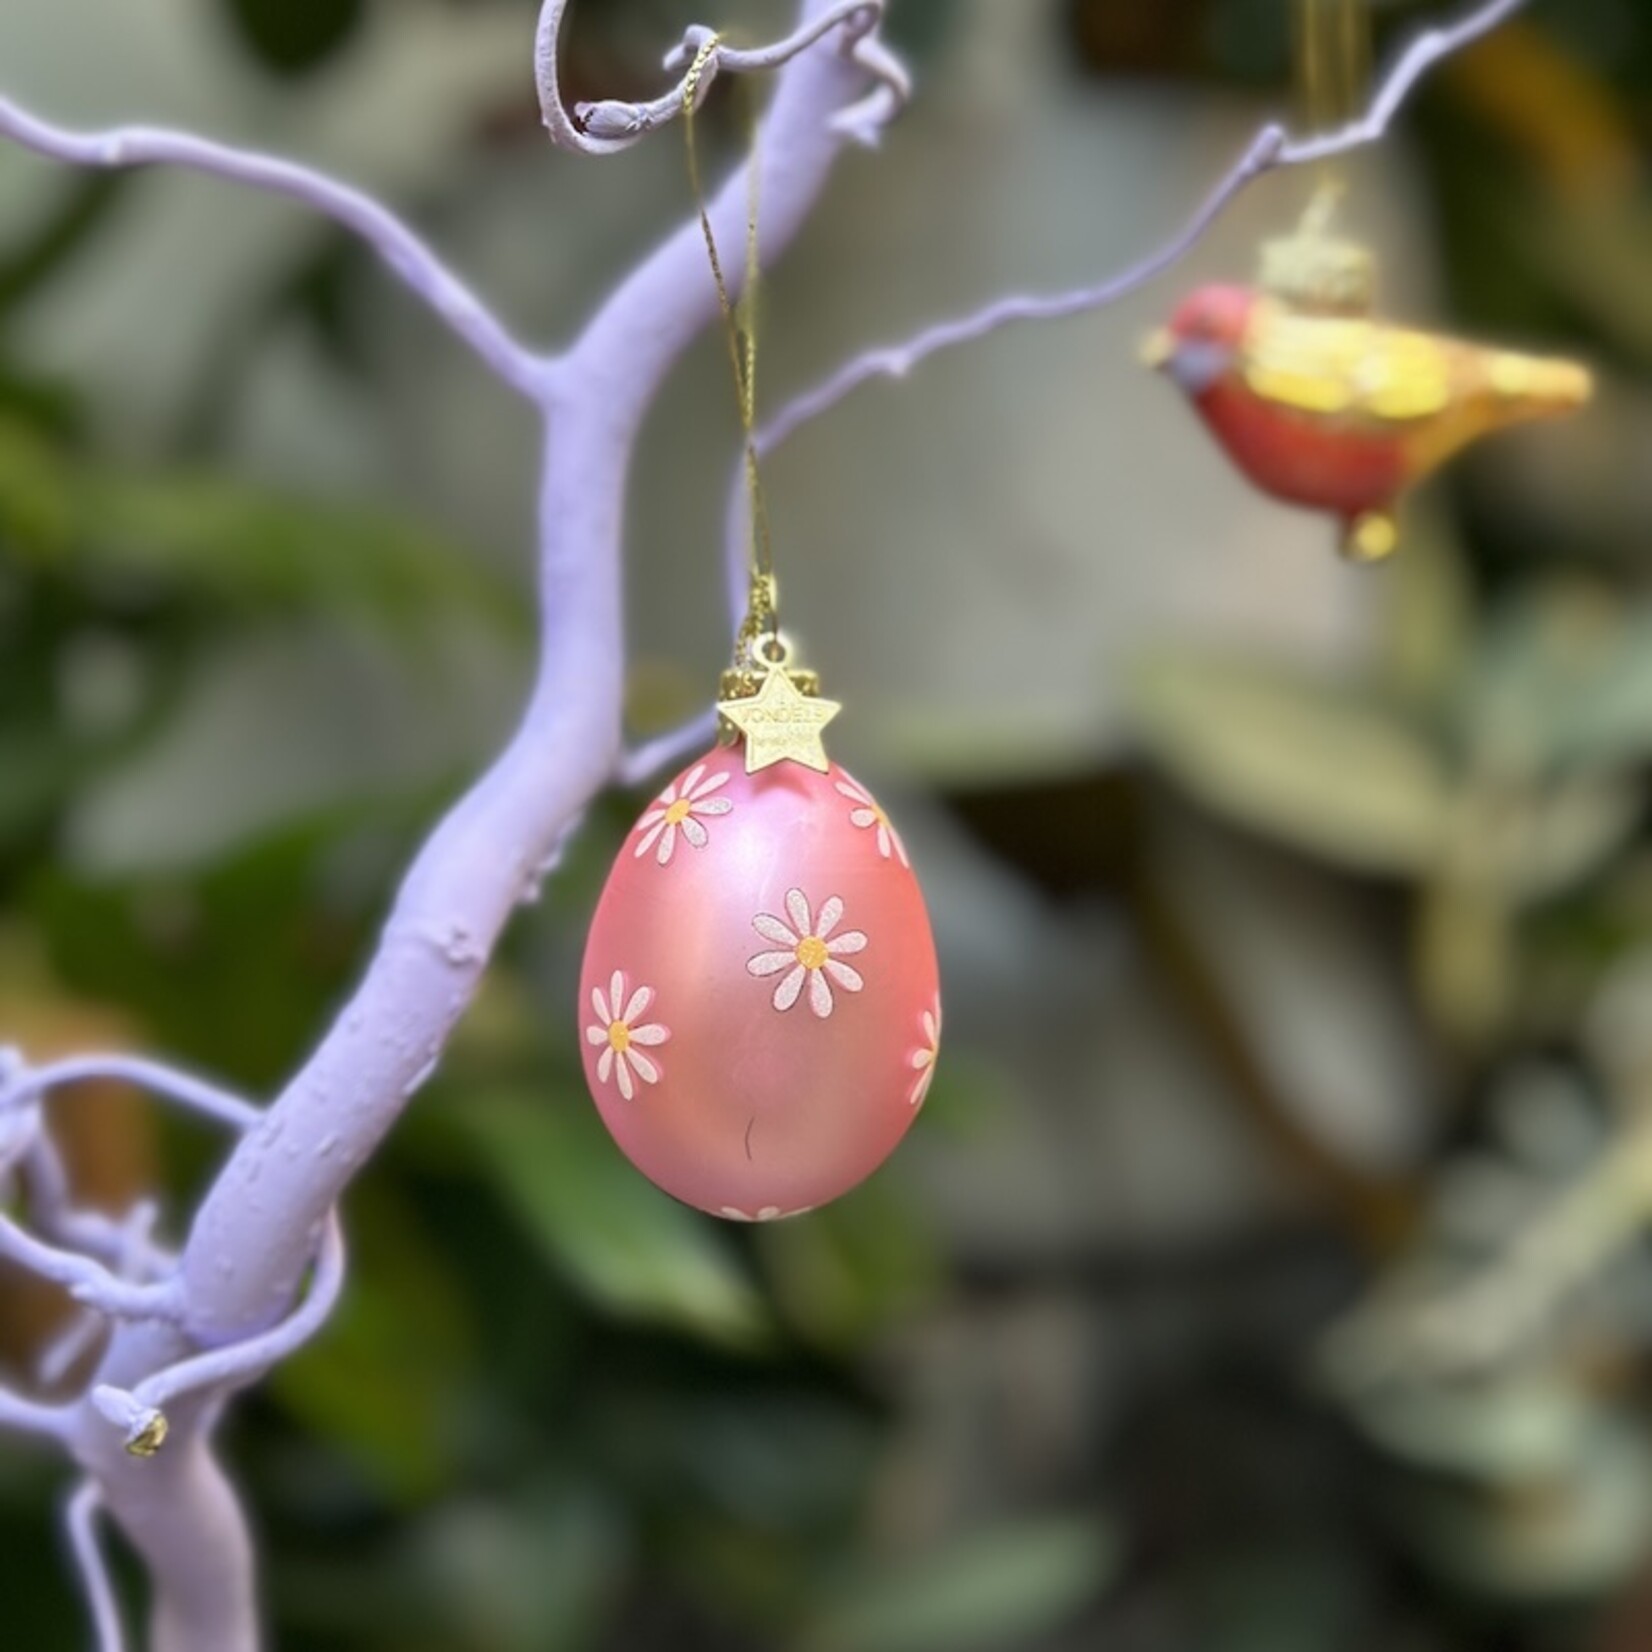 Paas ornament - roze ei met bloemetjes